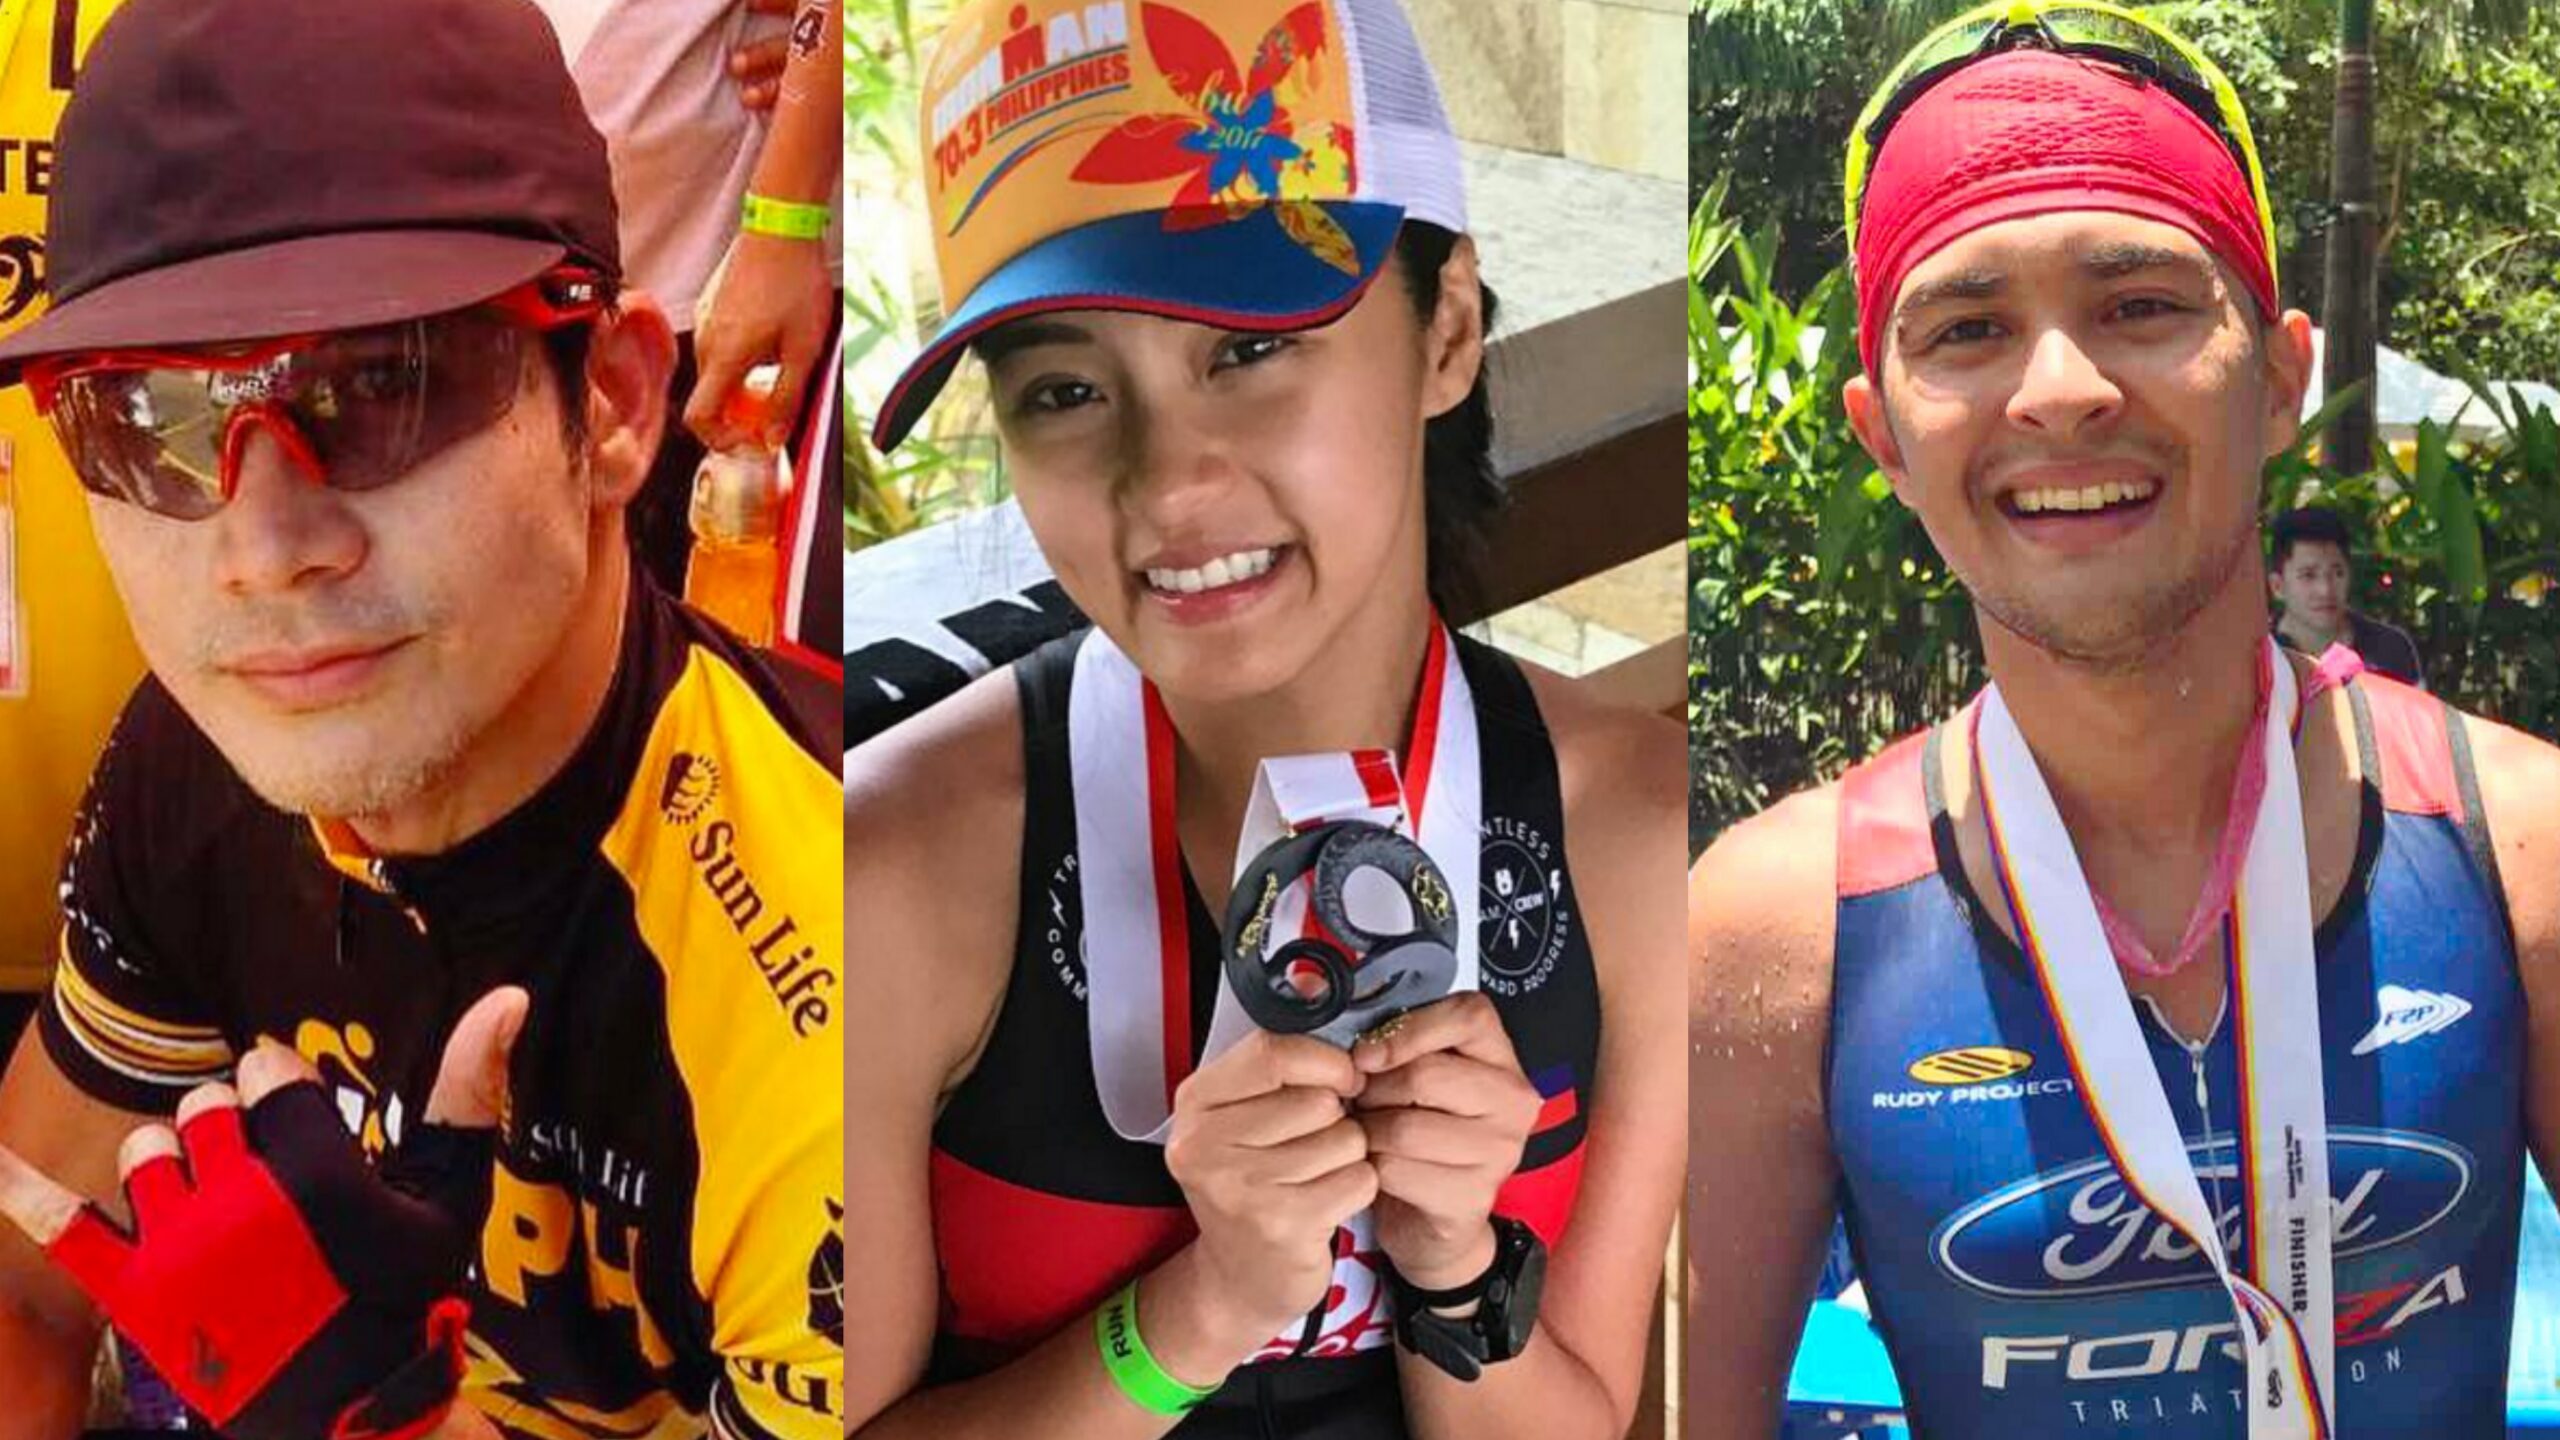 IN PHOTOS: Celebrities at Ironman 70.3 race in Cebu